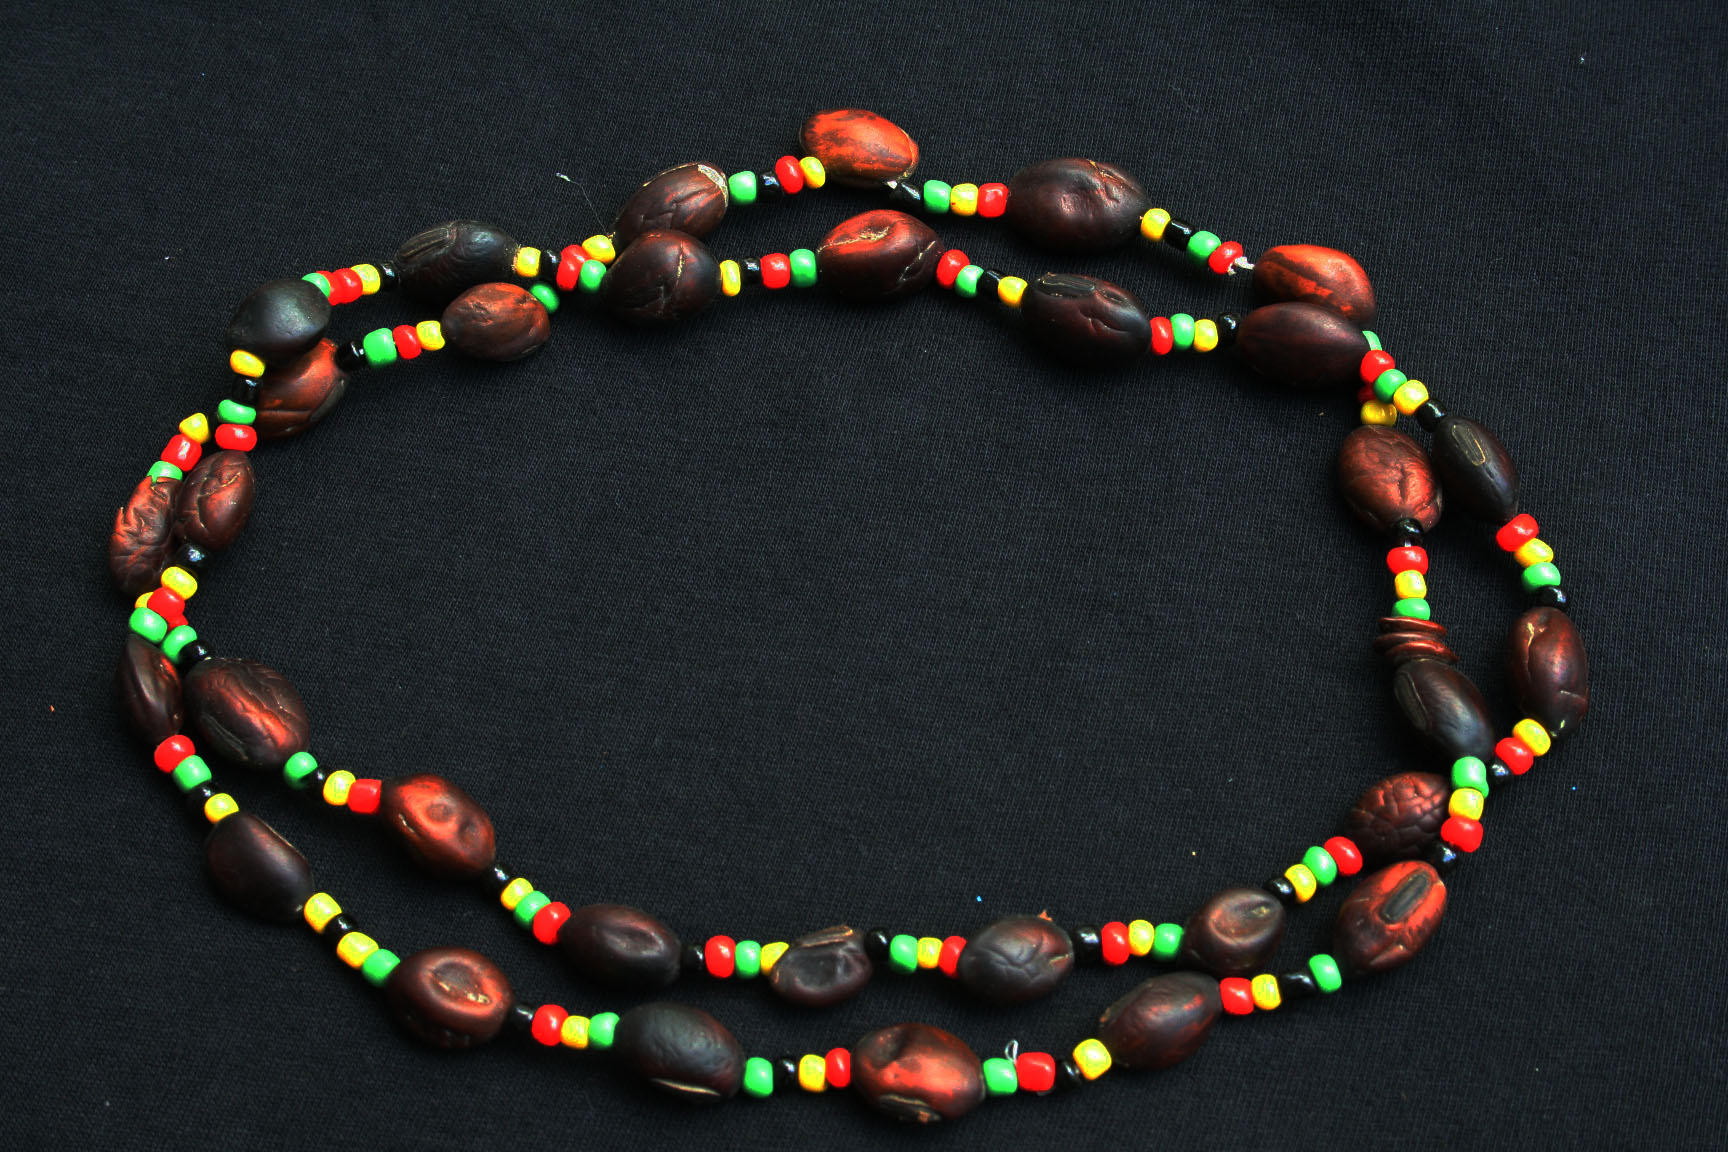 Natural and Rasta Beads